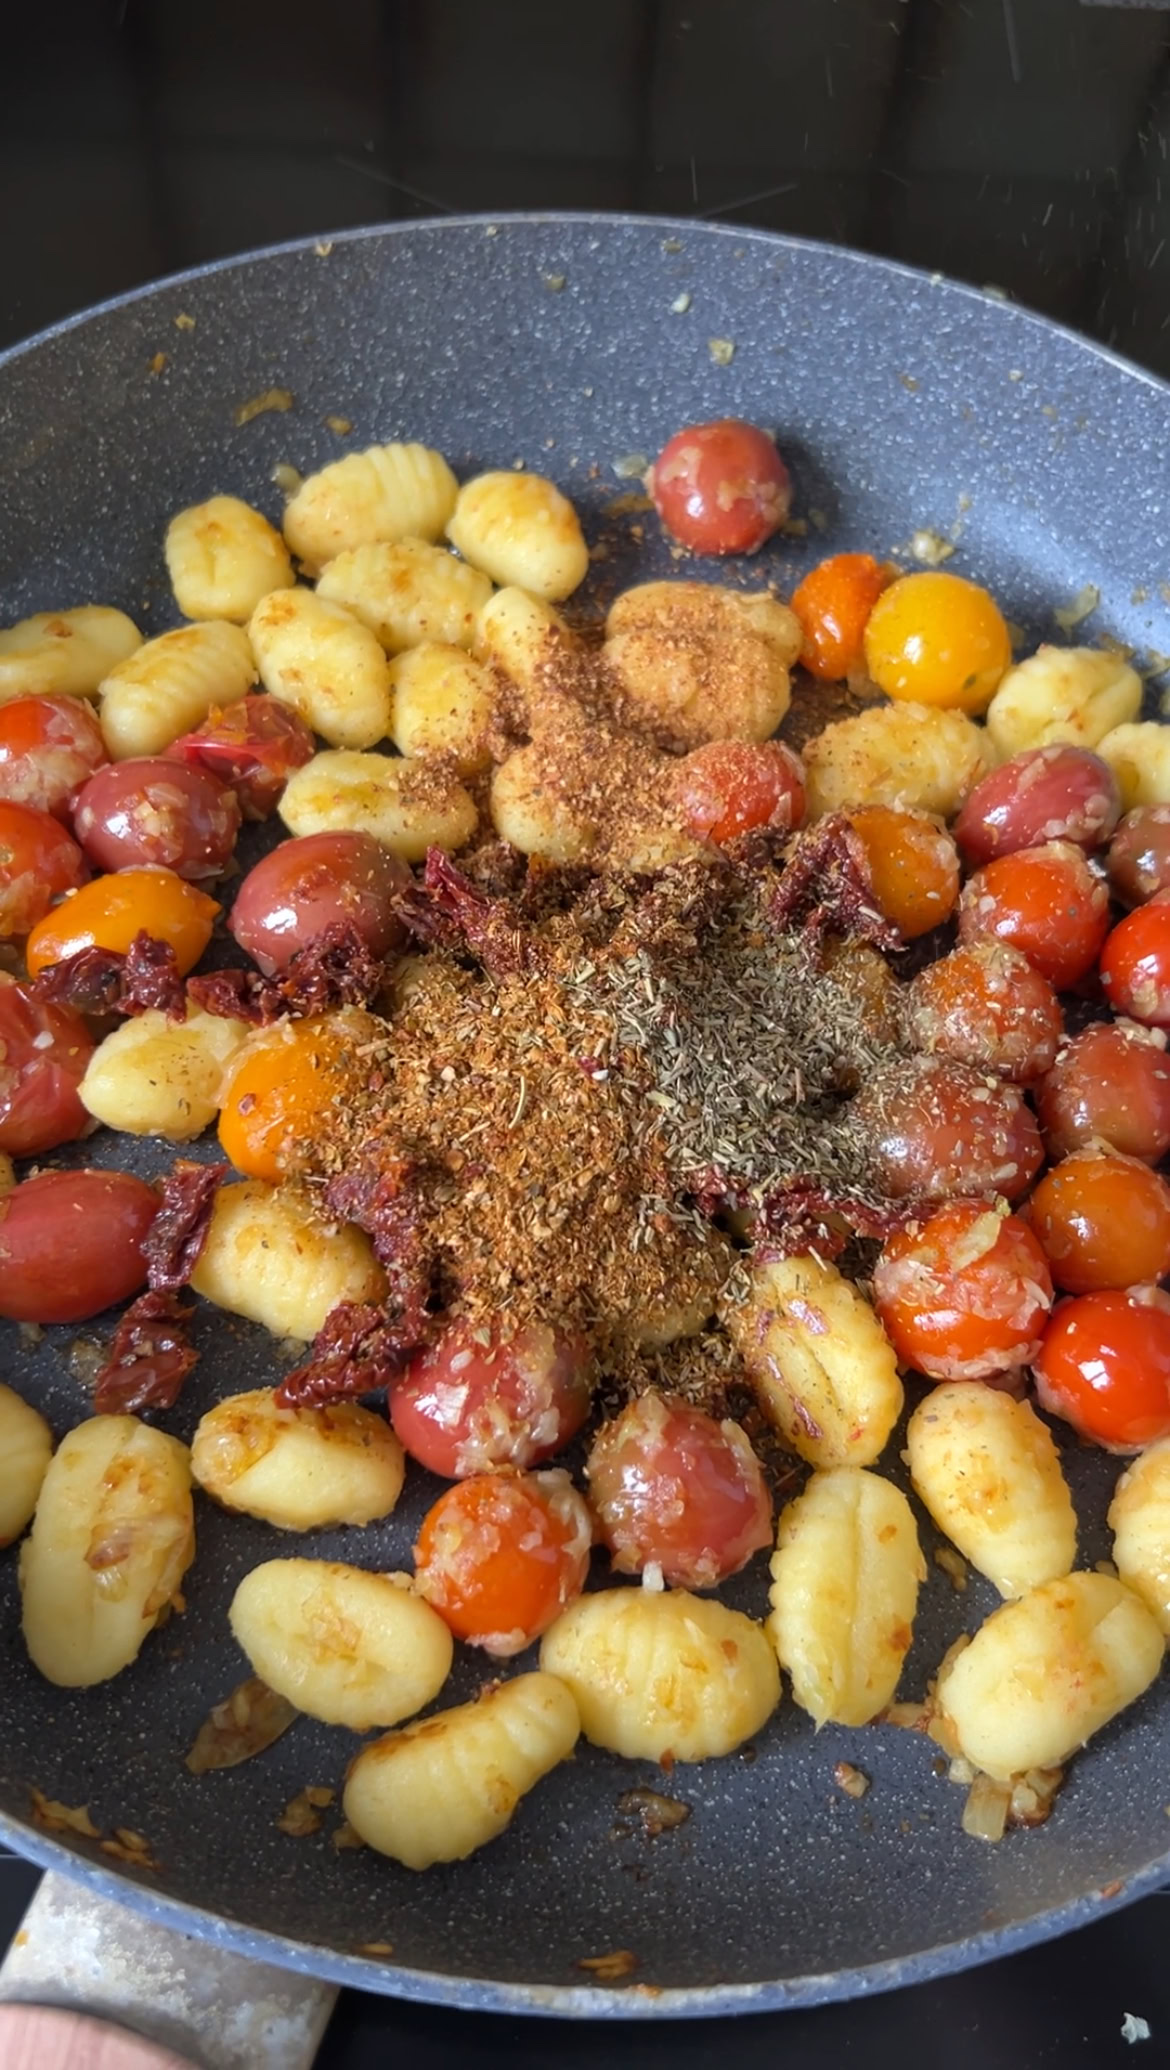 Espelette pepper, oregano and Italian seasoning added to the pan of gnocchi.